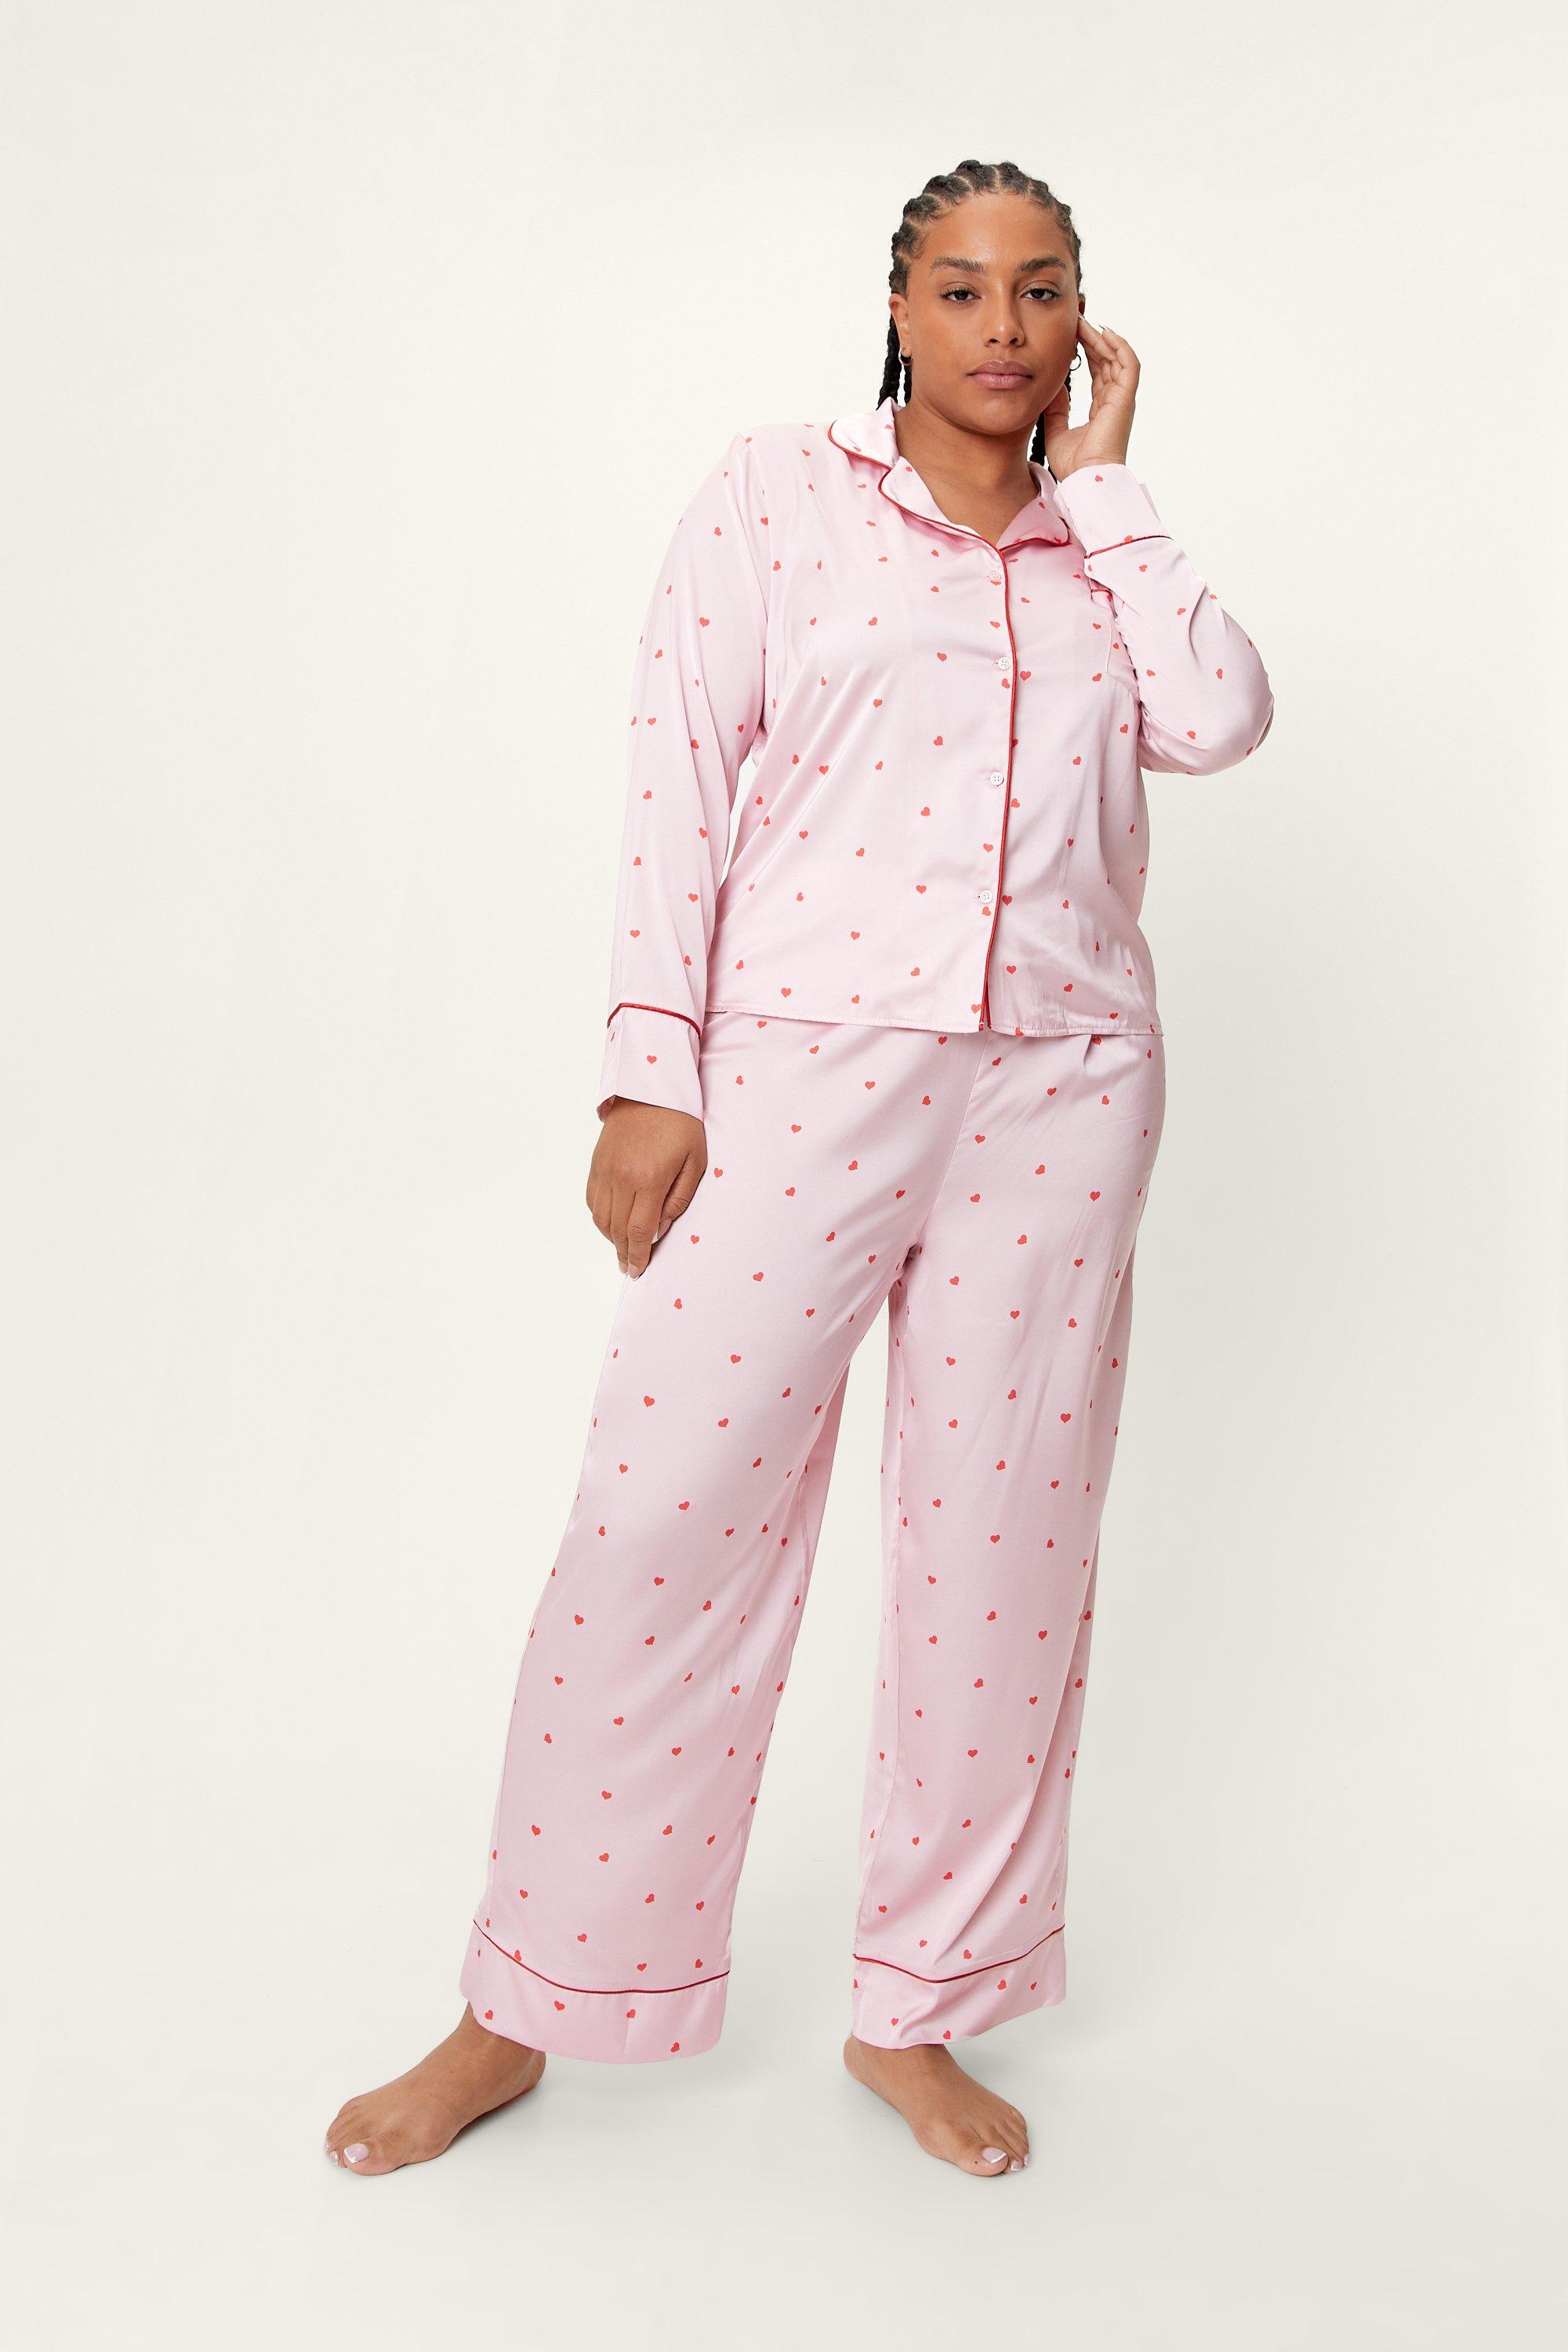 Grande Taille - Pyjama 6 Pièces Satiné À Motif De Cœur - Rose - 52, Rose